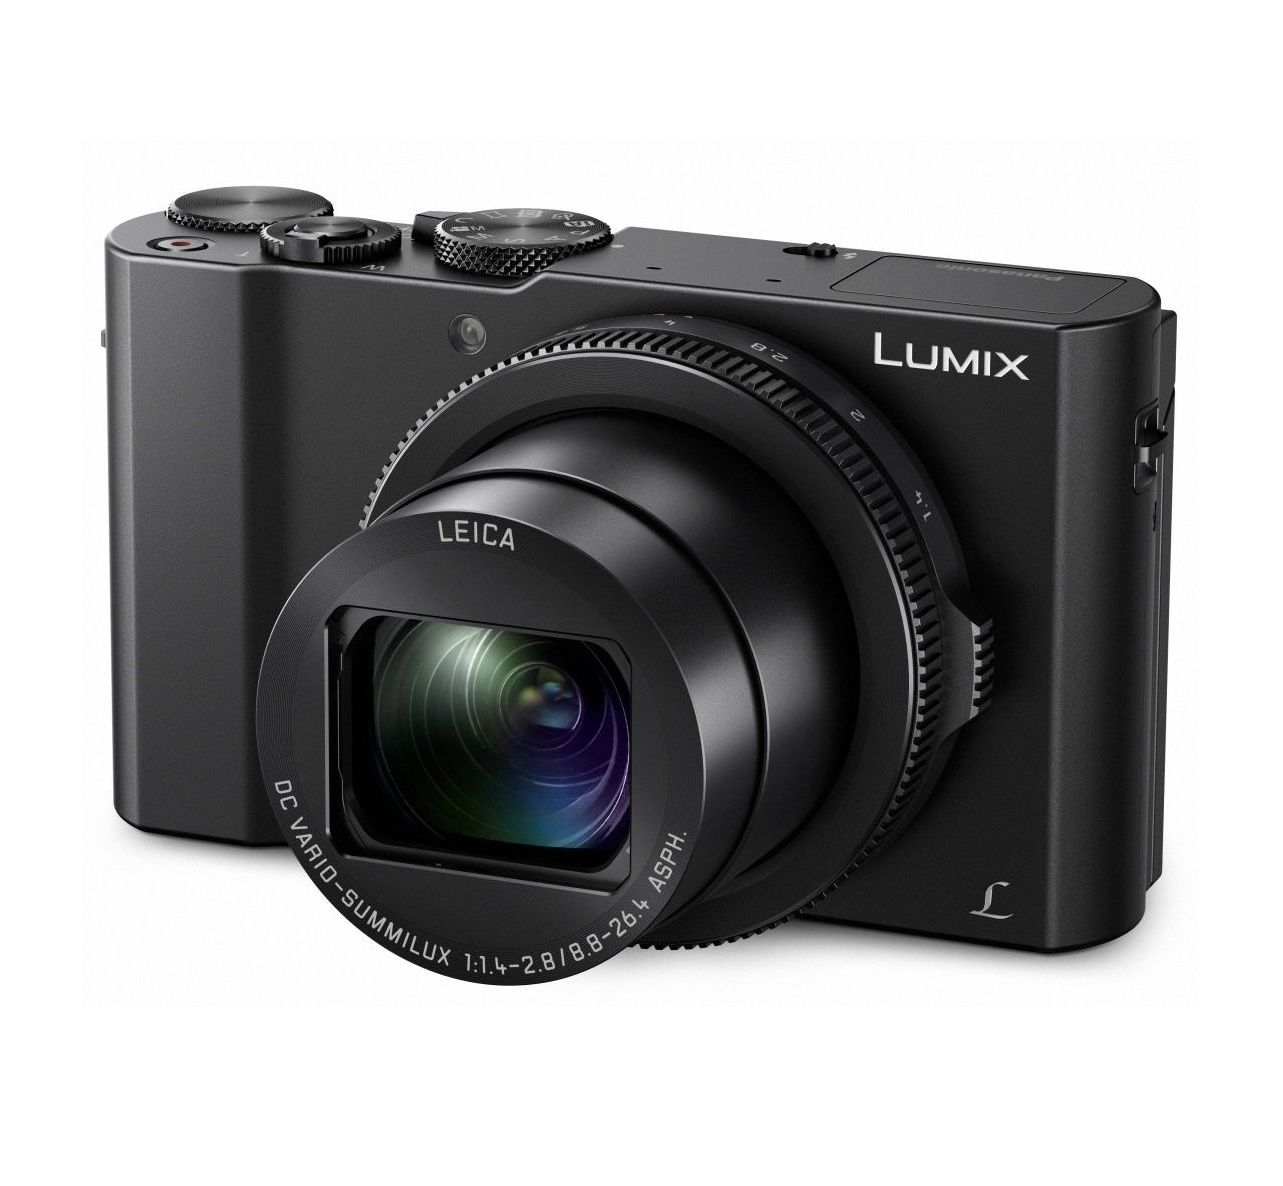 Panasonic Lumix DMC-LX15